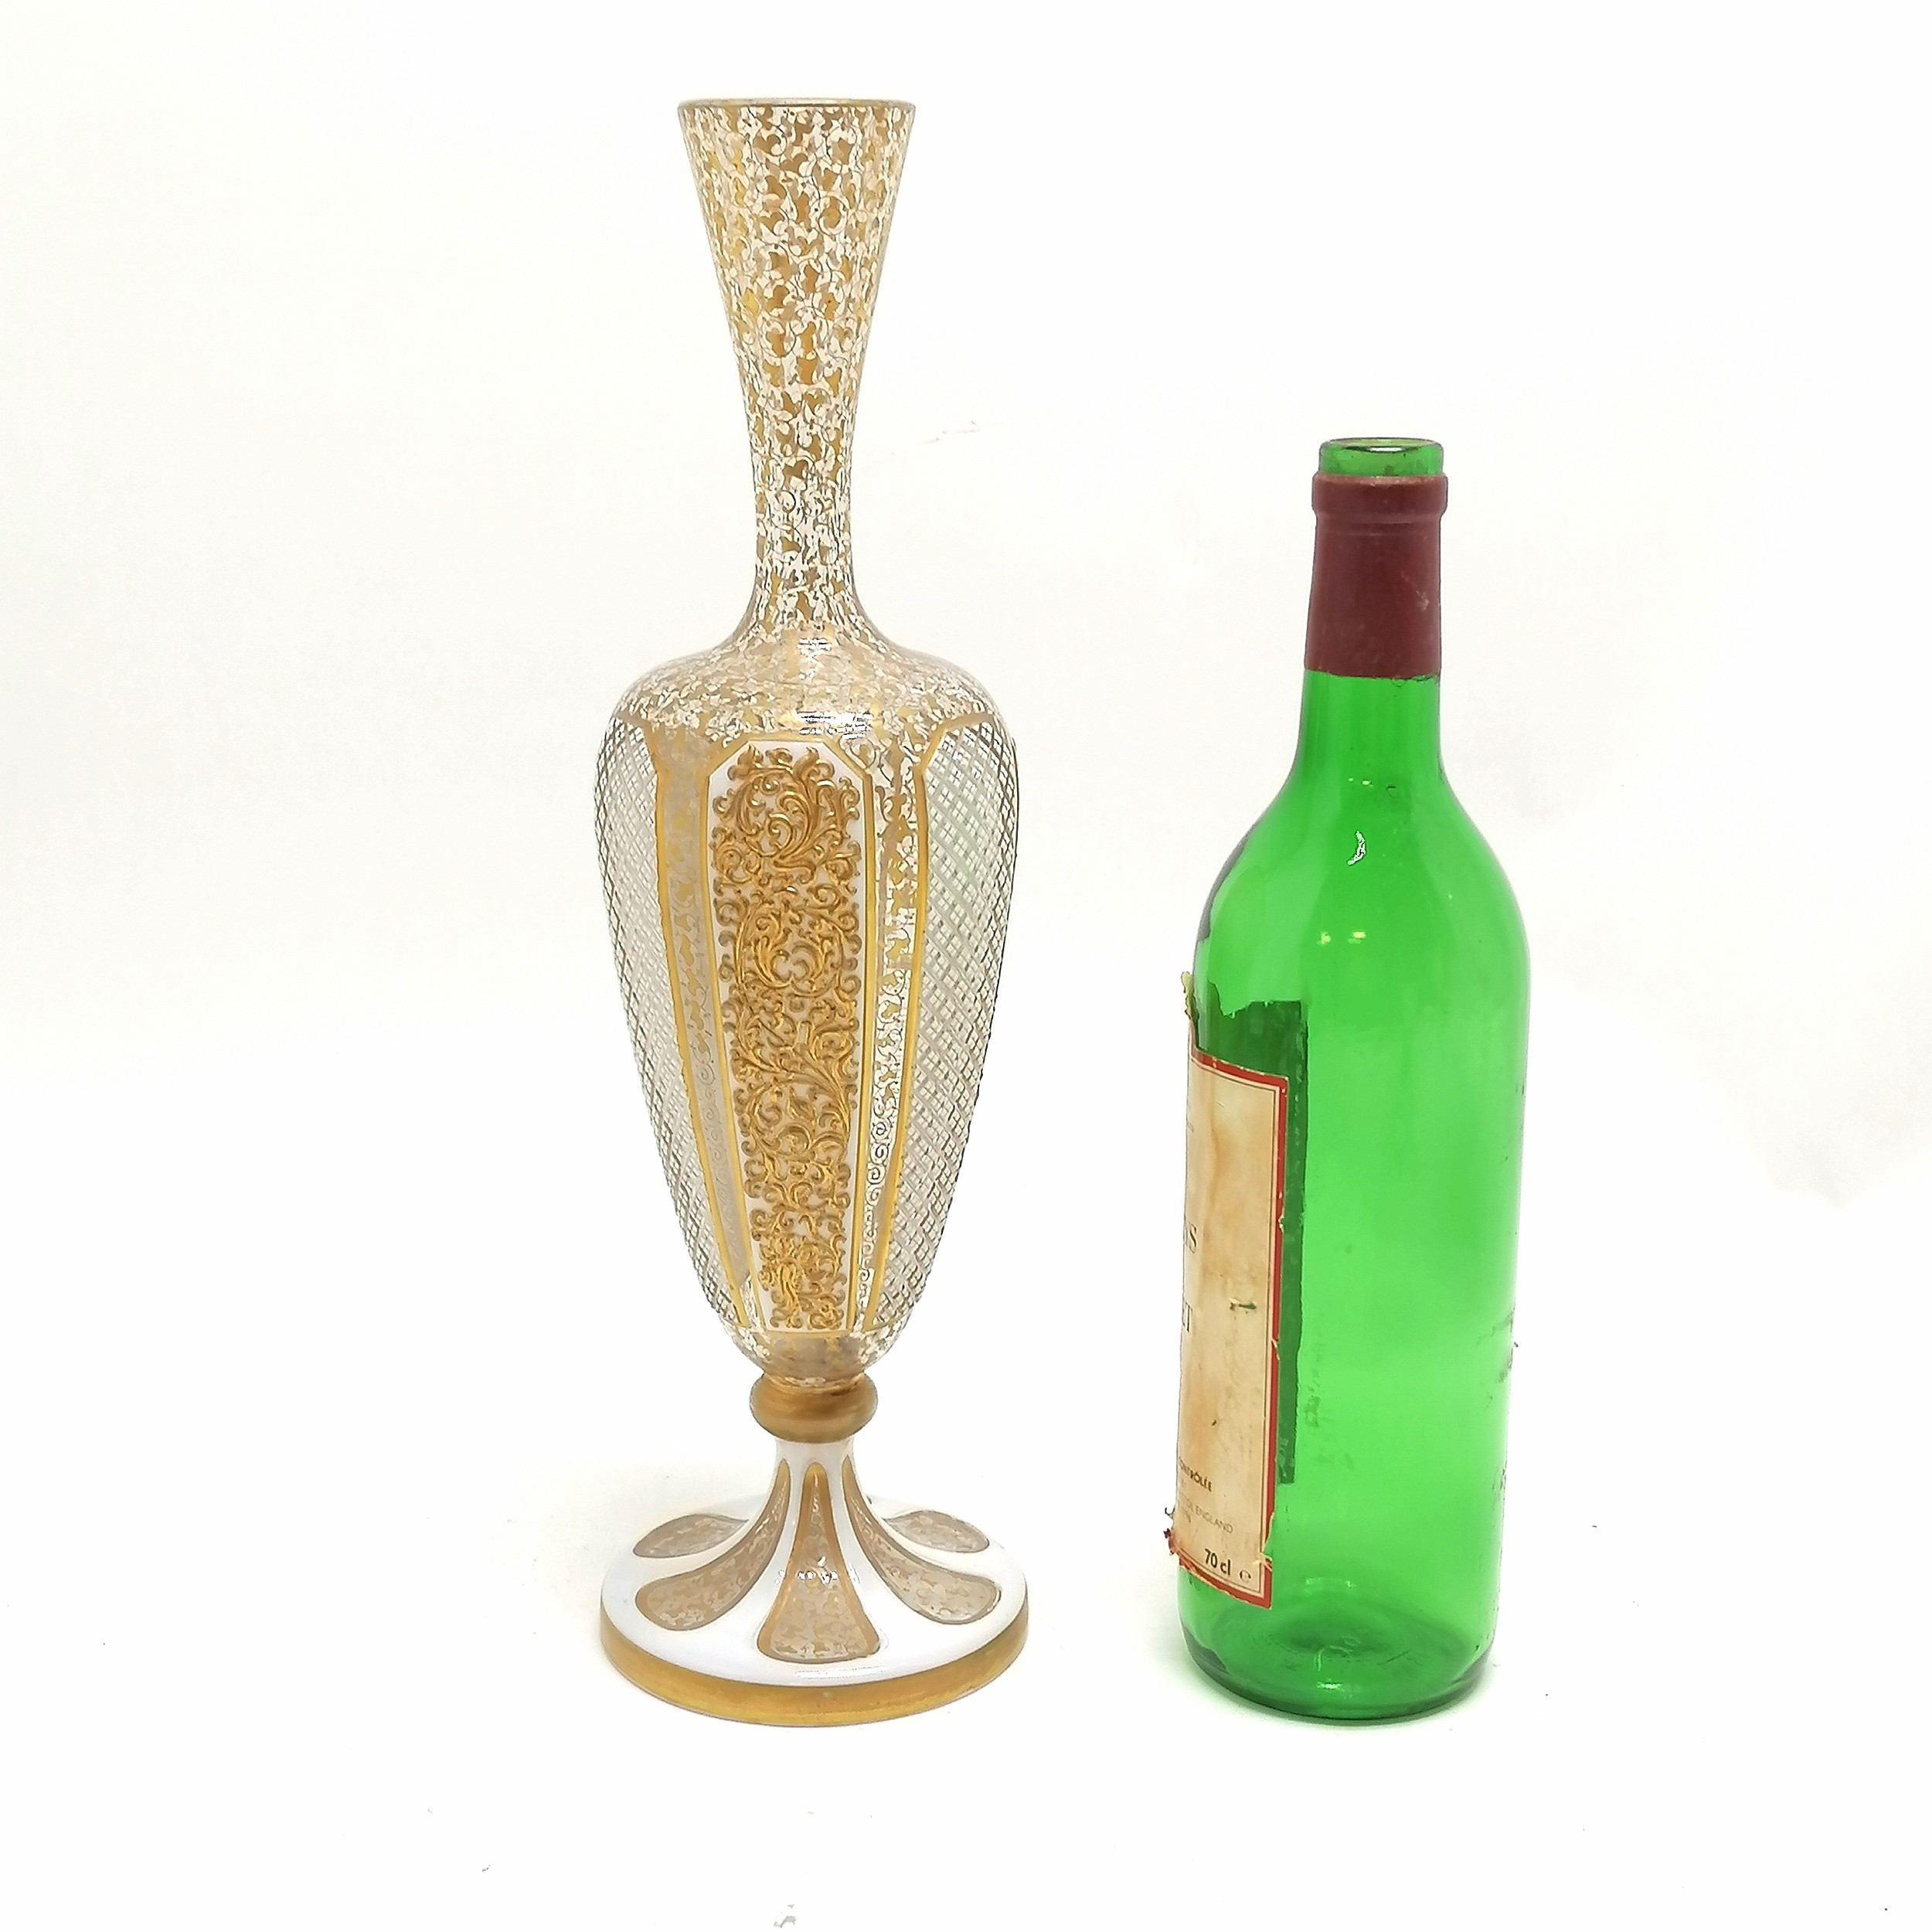 Antique Bohemian overlaid glass vase with profuse gilt decoration & decorative panels - 36cm - Image 5 of 5